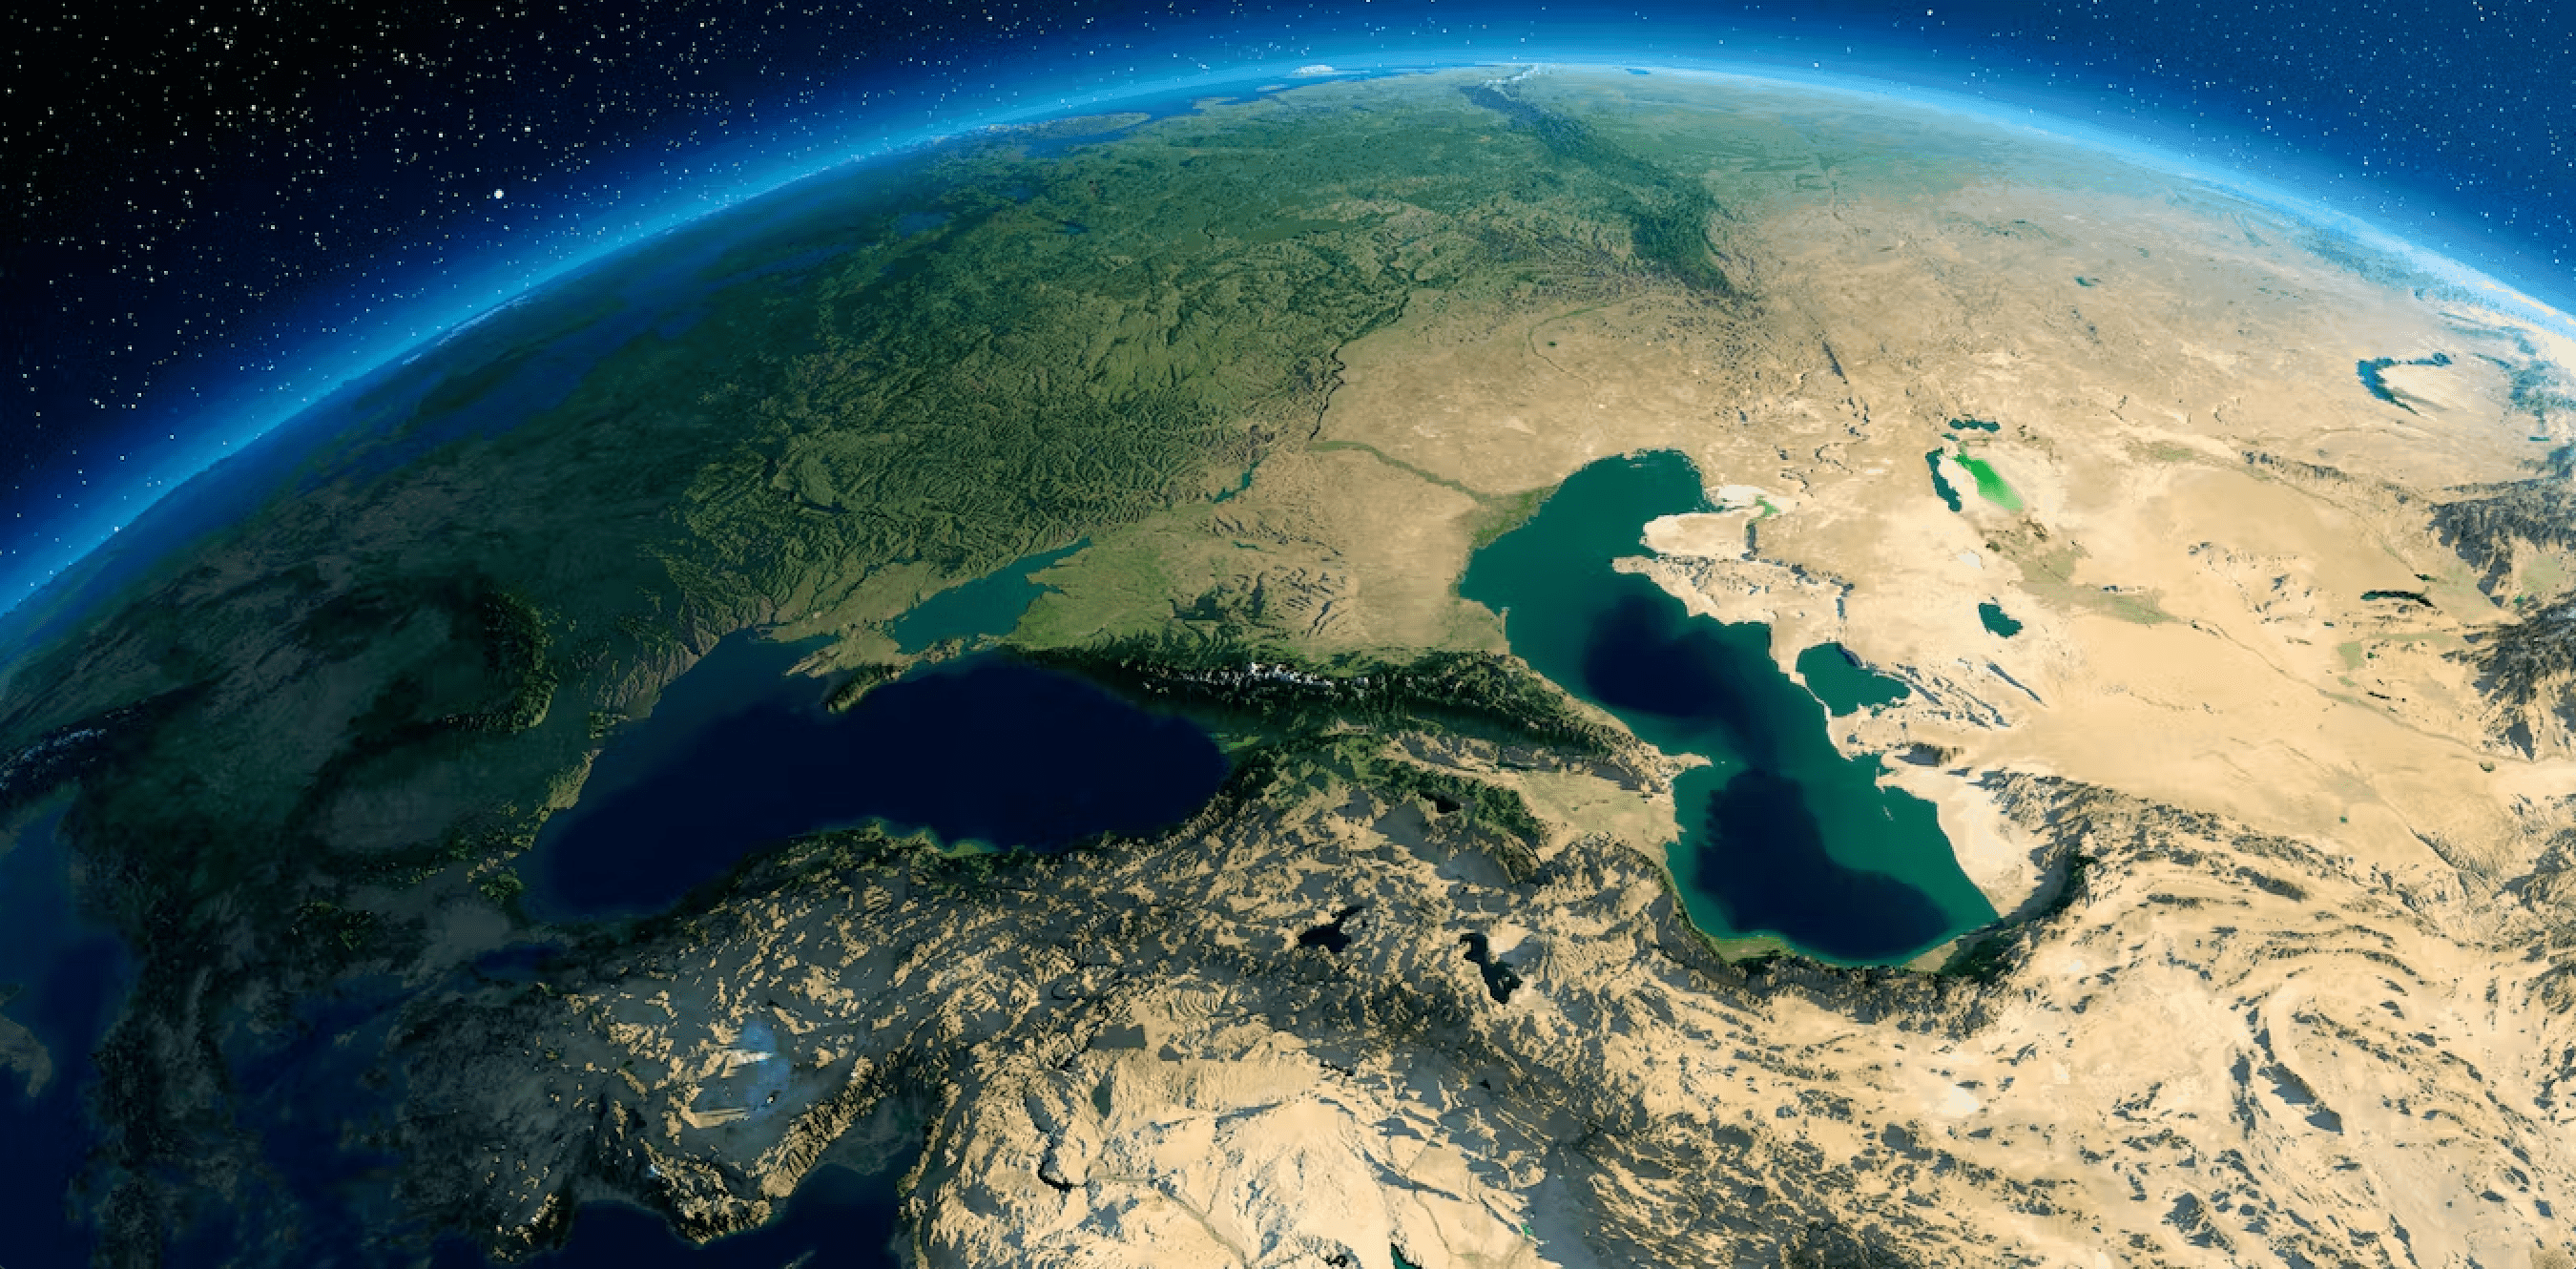 A Tectonic Shift in The Greater Caspian Region